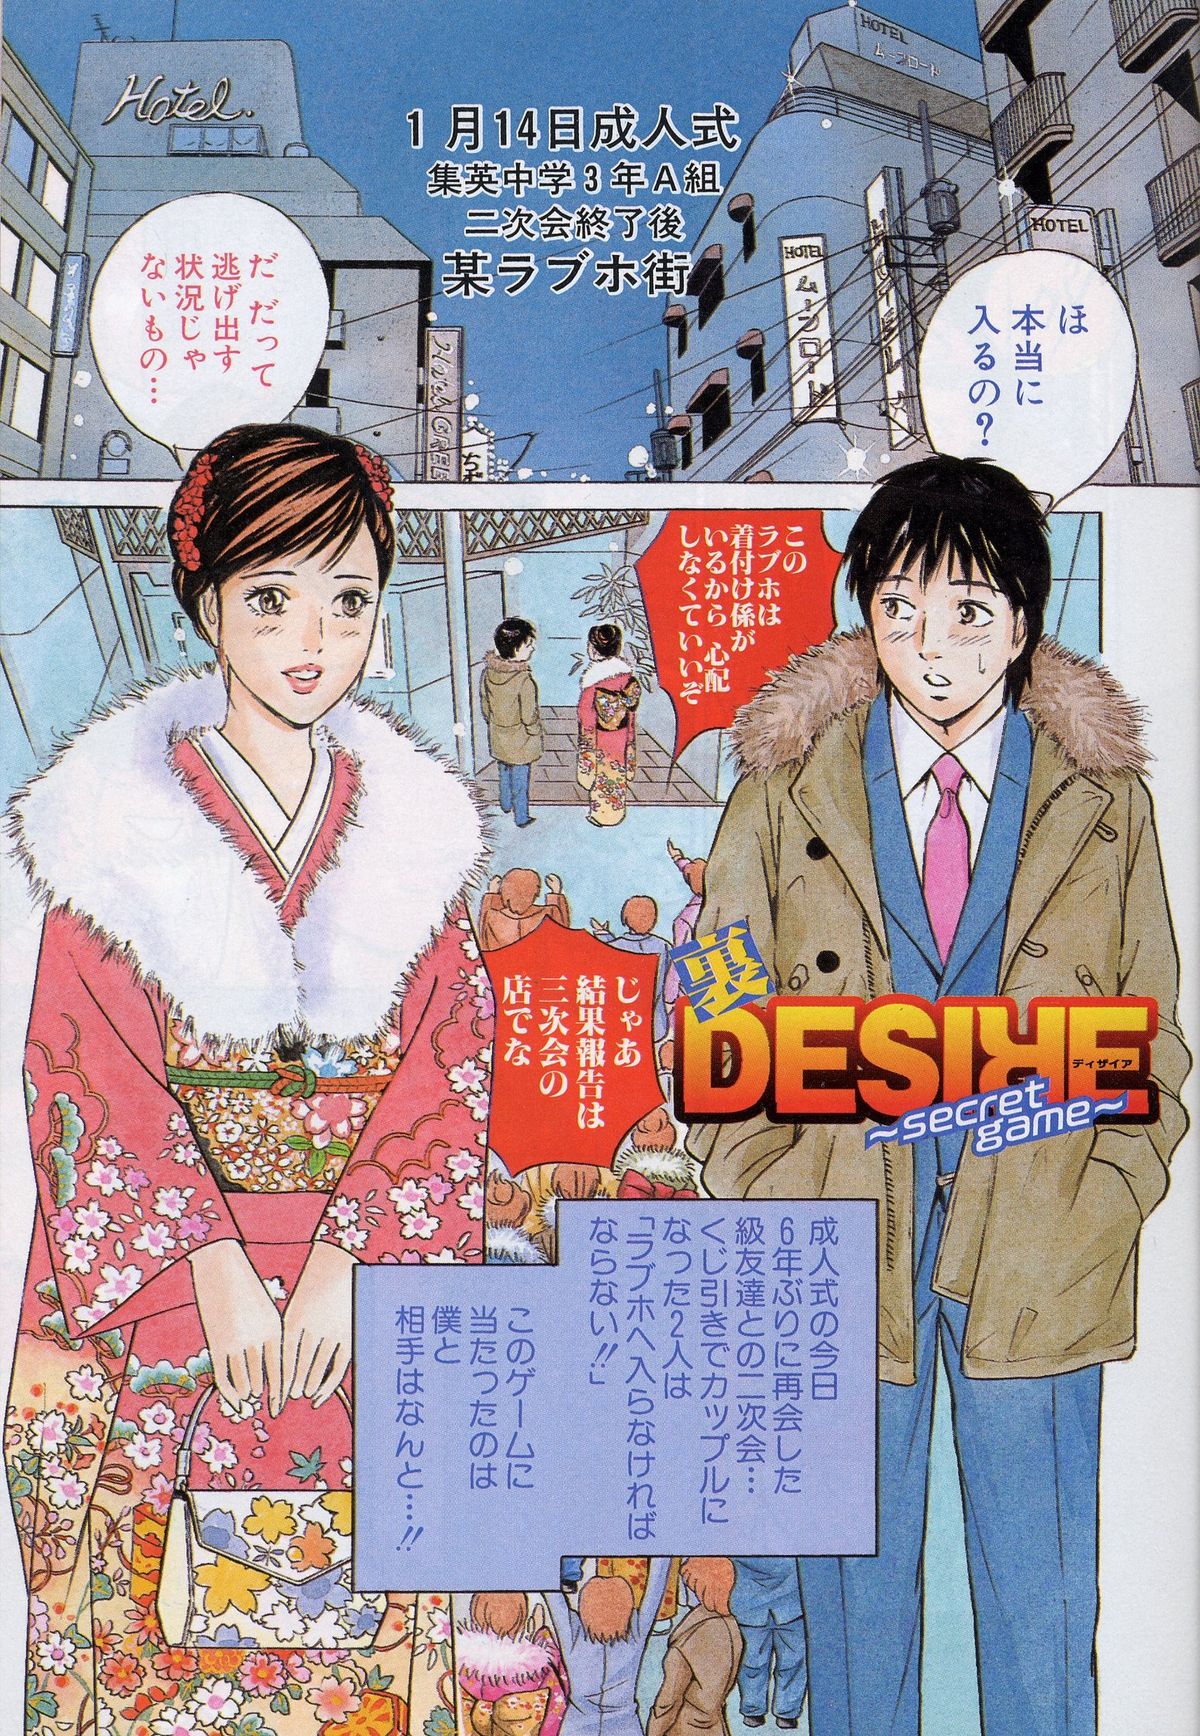 [Kenichi Kotani] Desire 2nd Season 04 